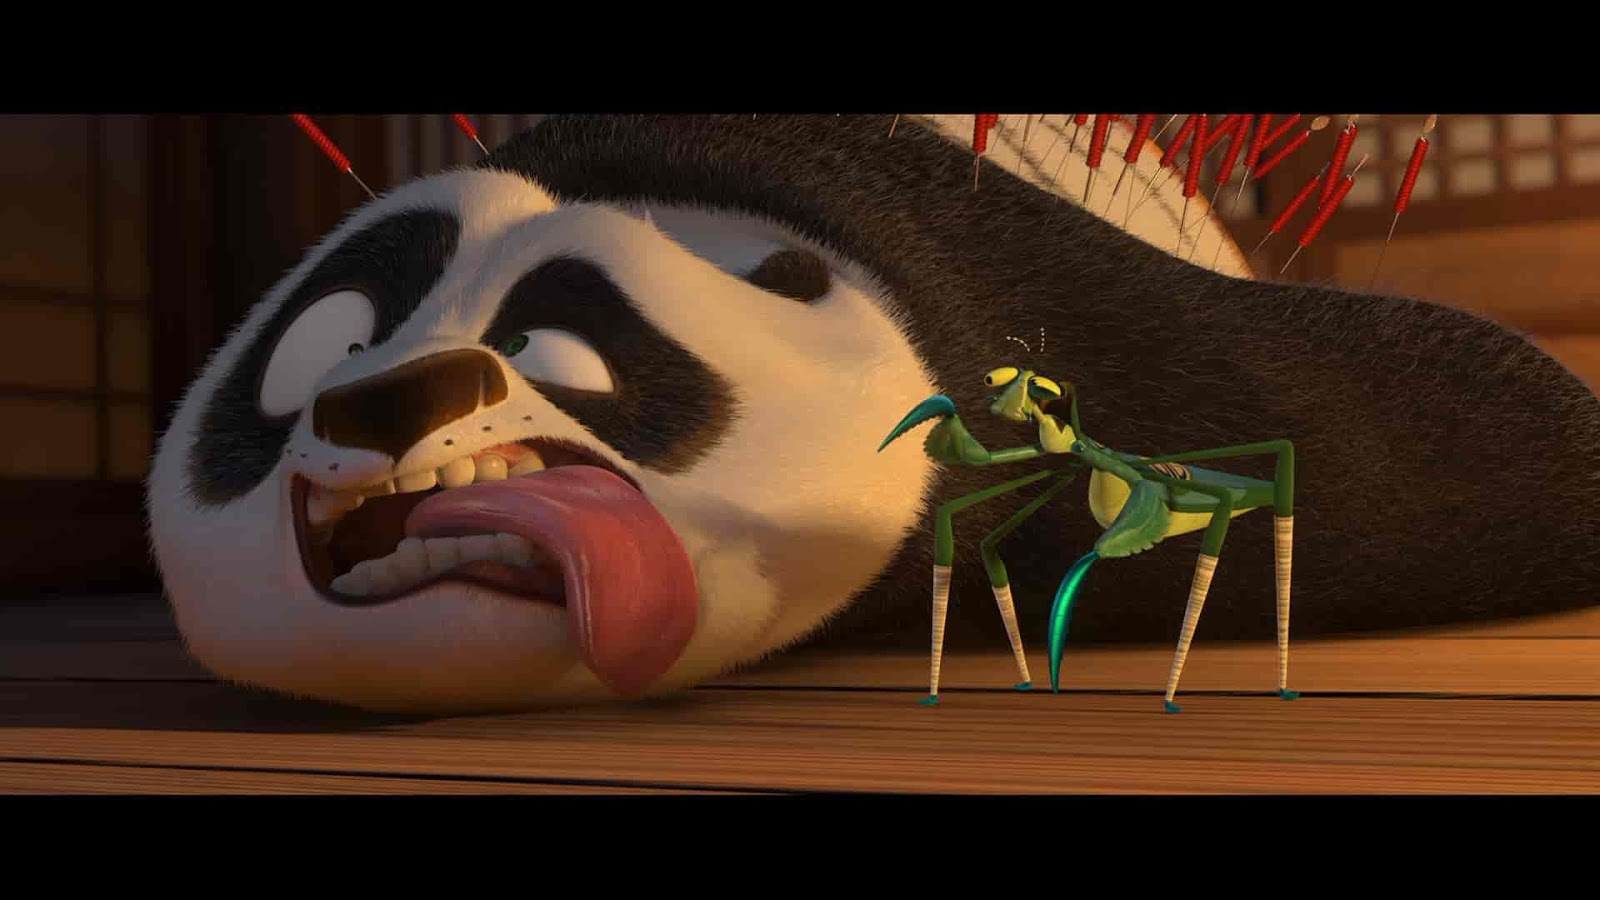 kung fu panda 1 full movie hd